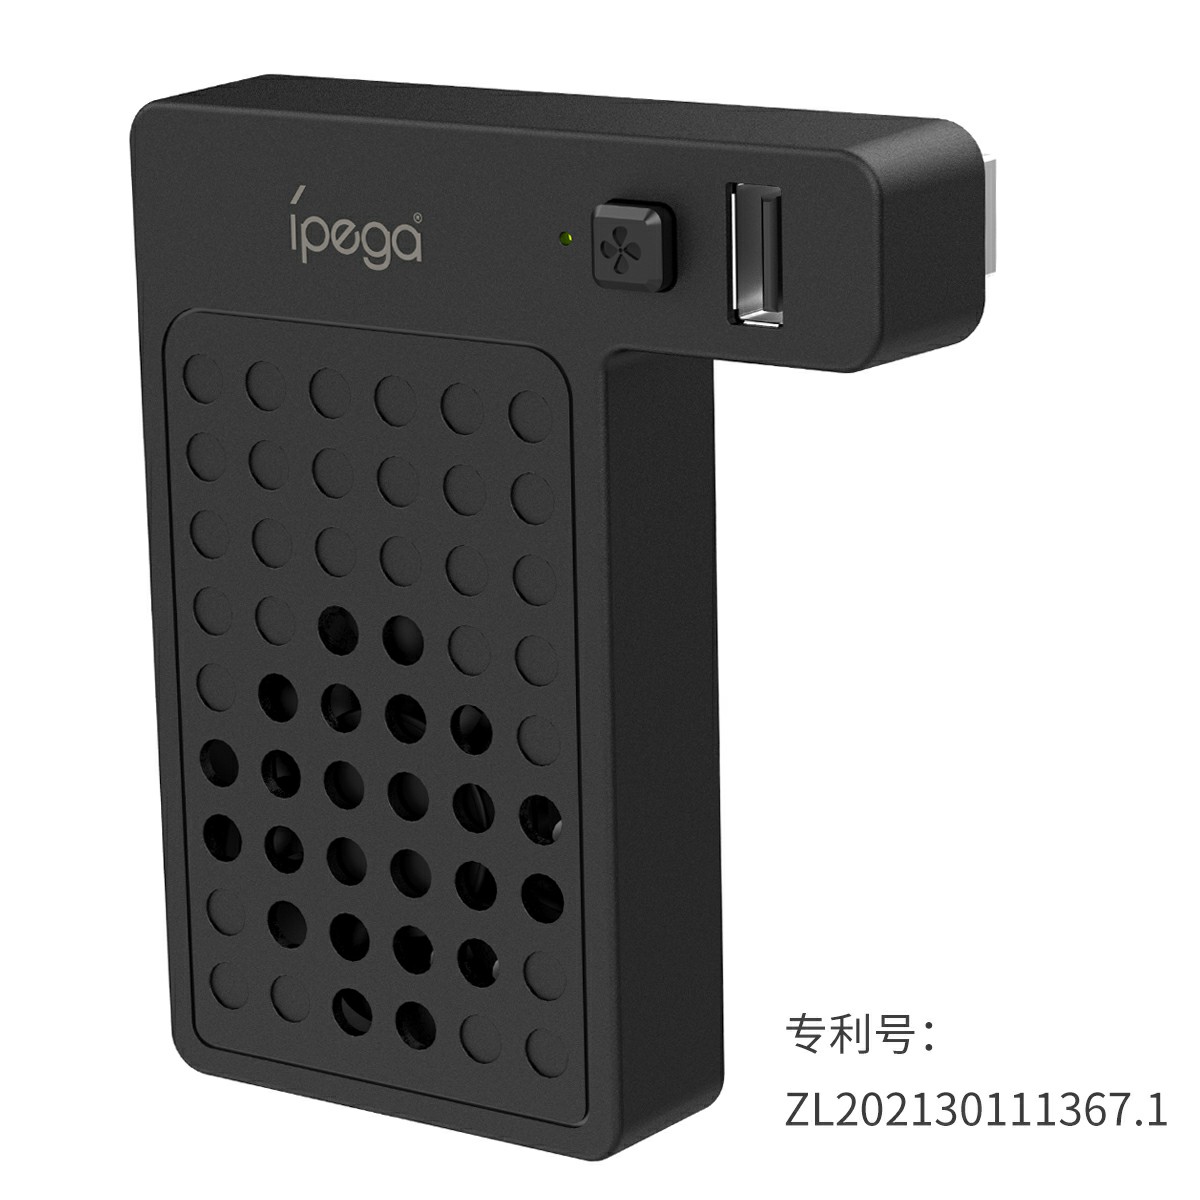 Ipega-XBX012 XBOX series x host cooling fan